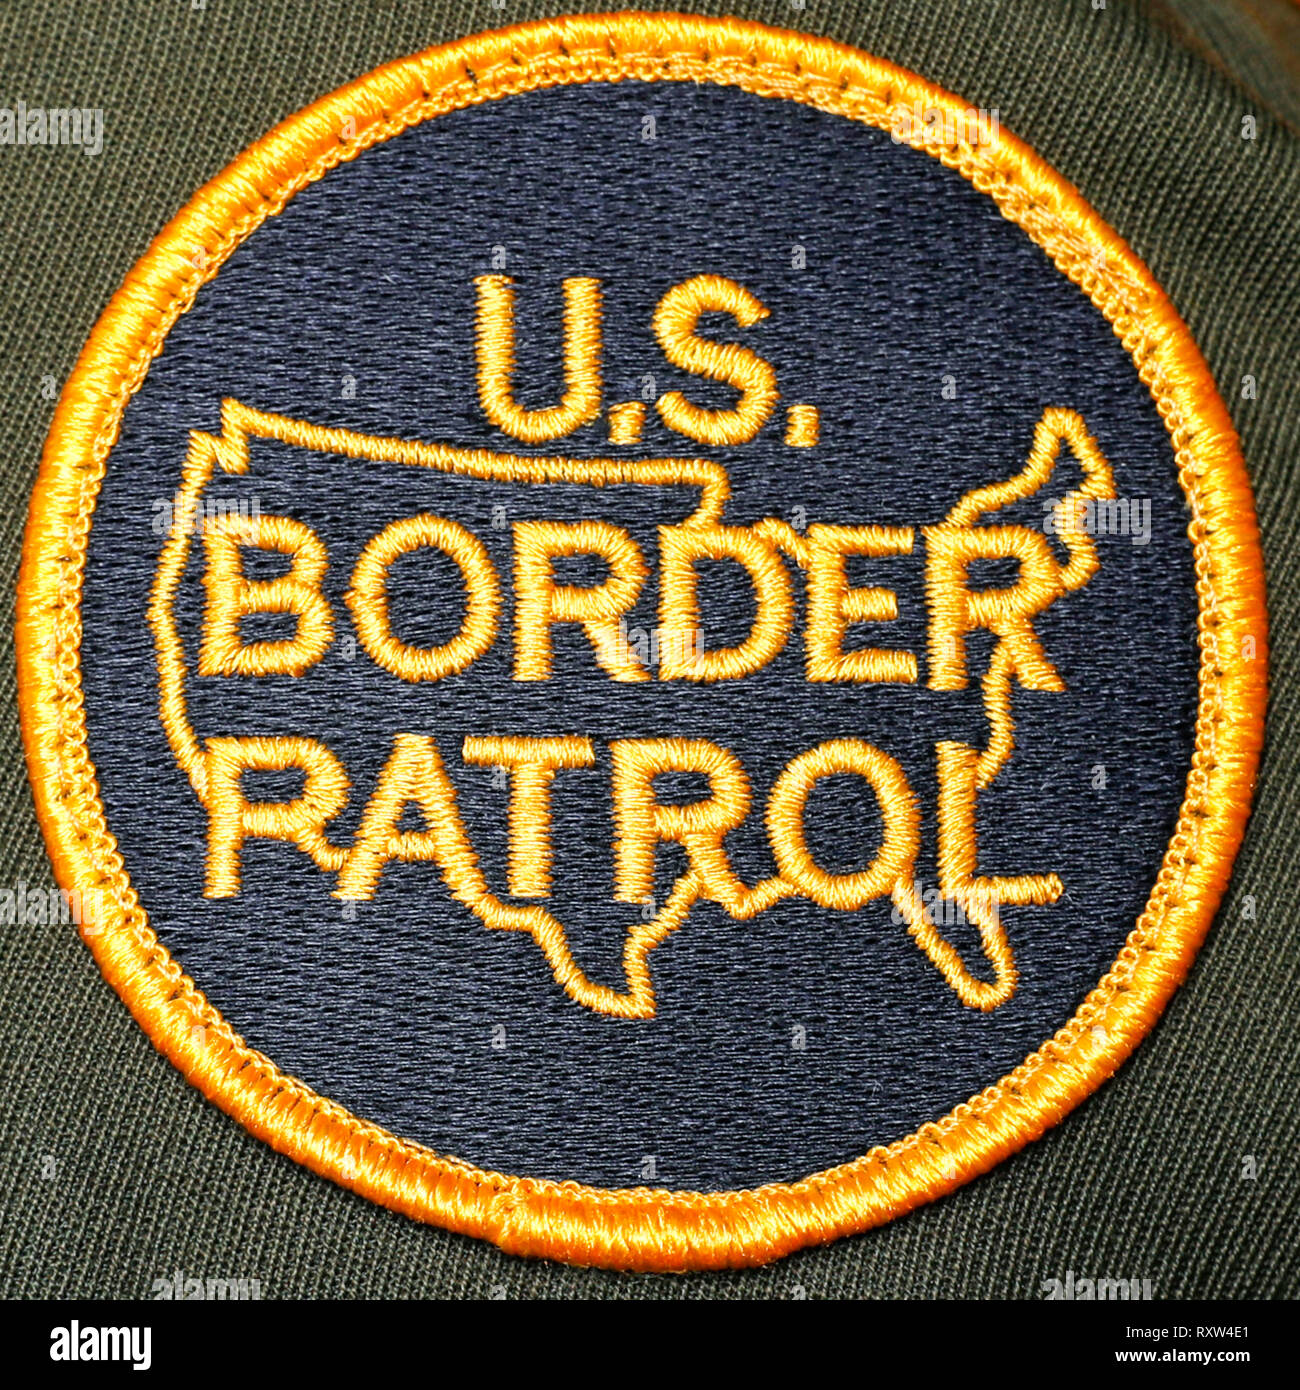 U.S. Customs and Border Protection Badge Stock Photo